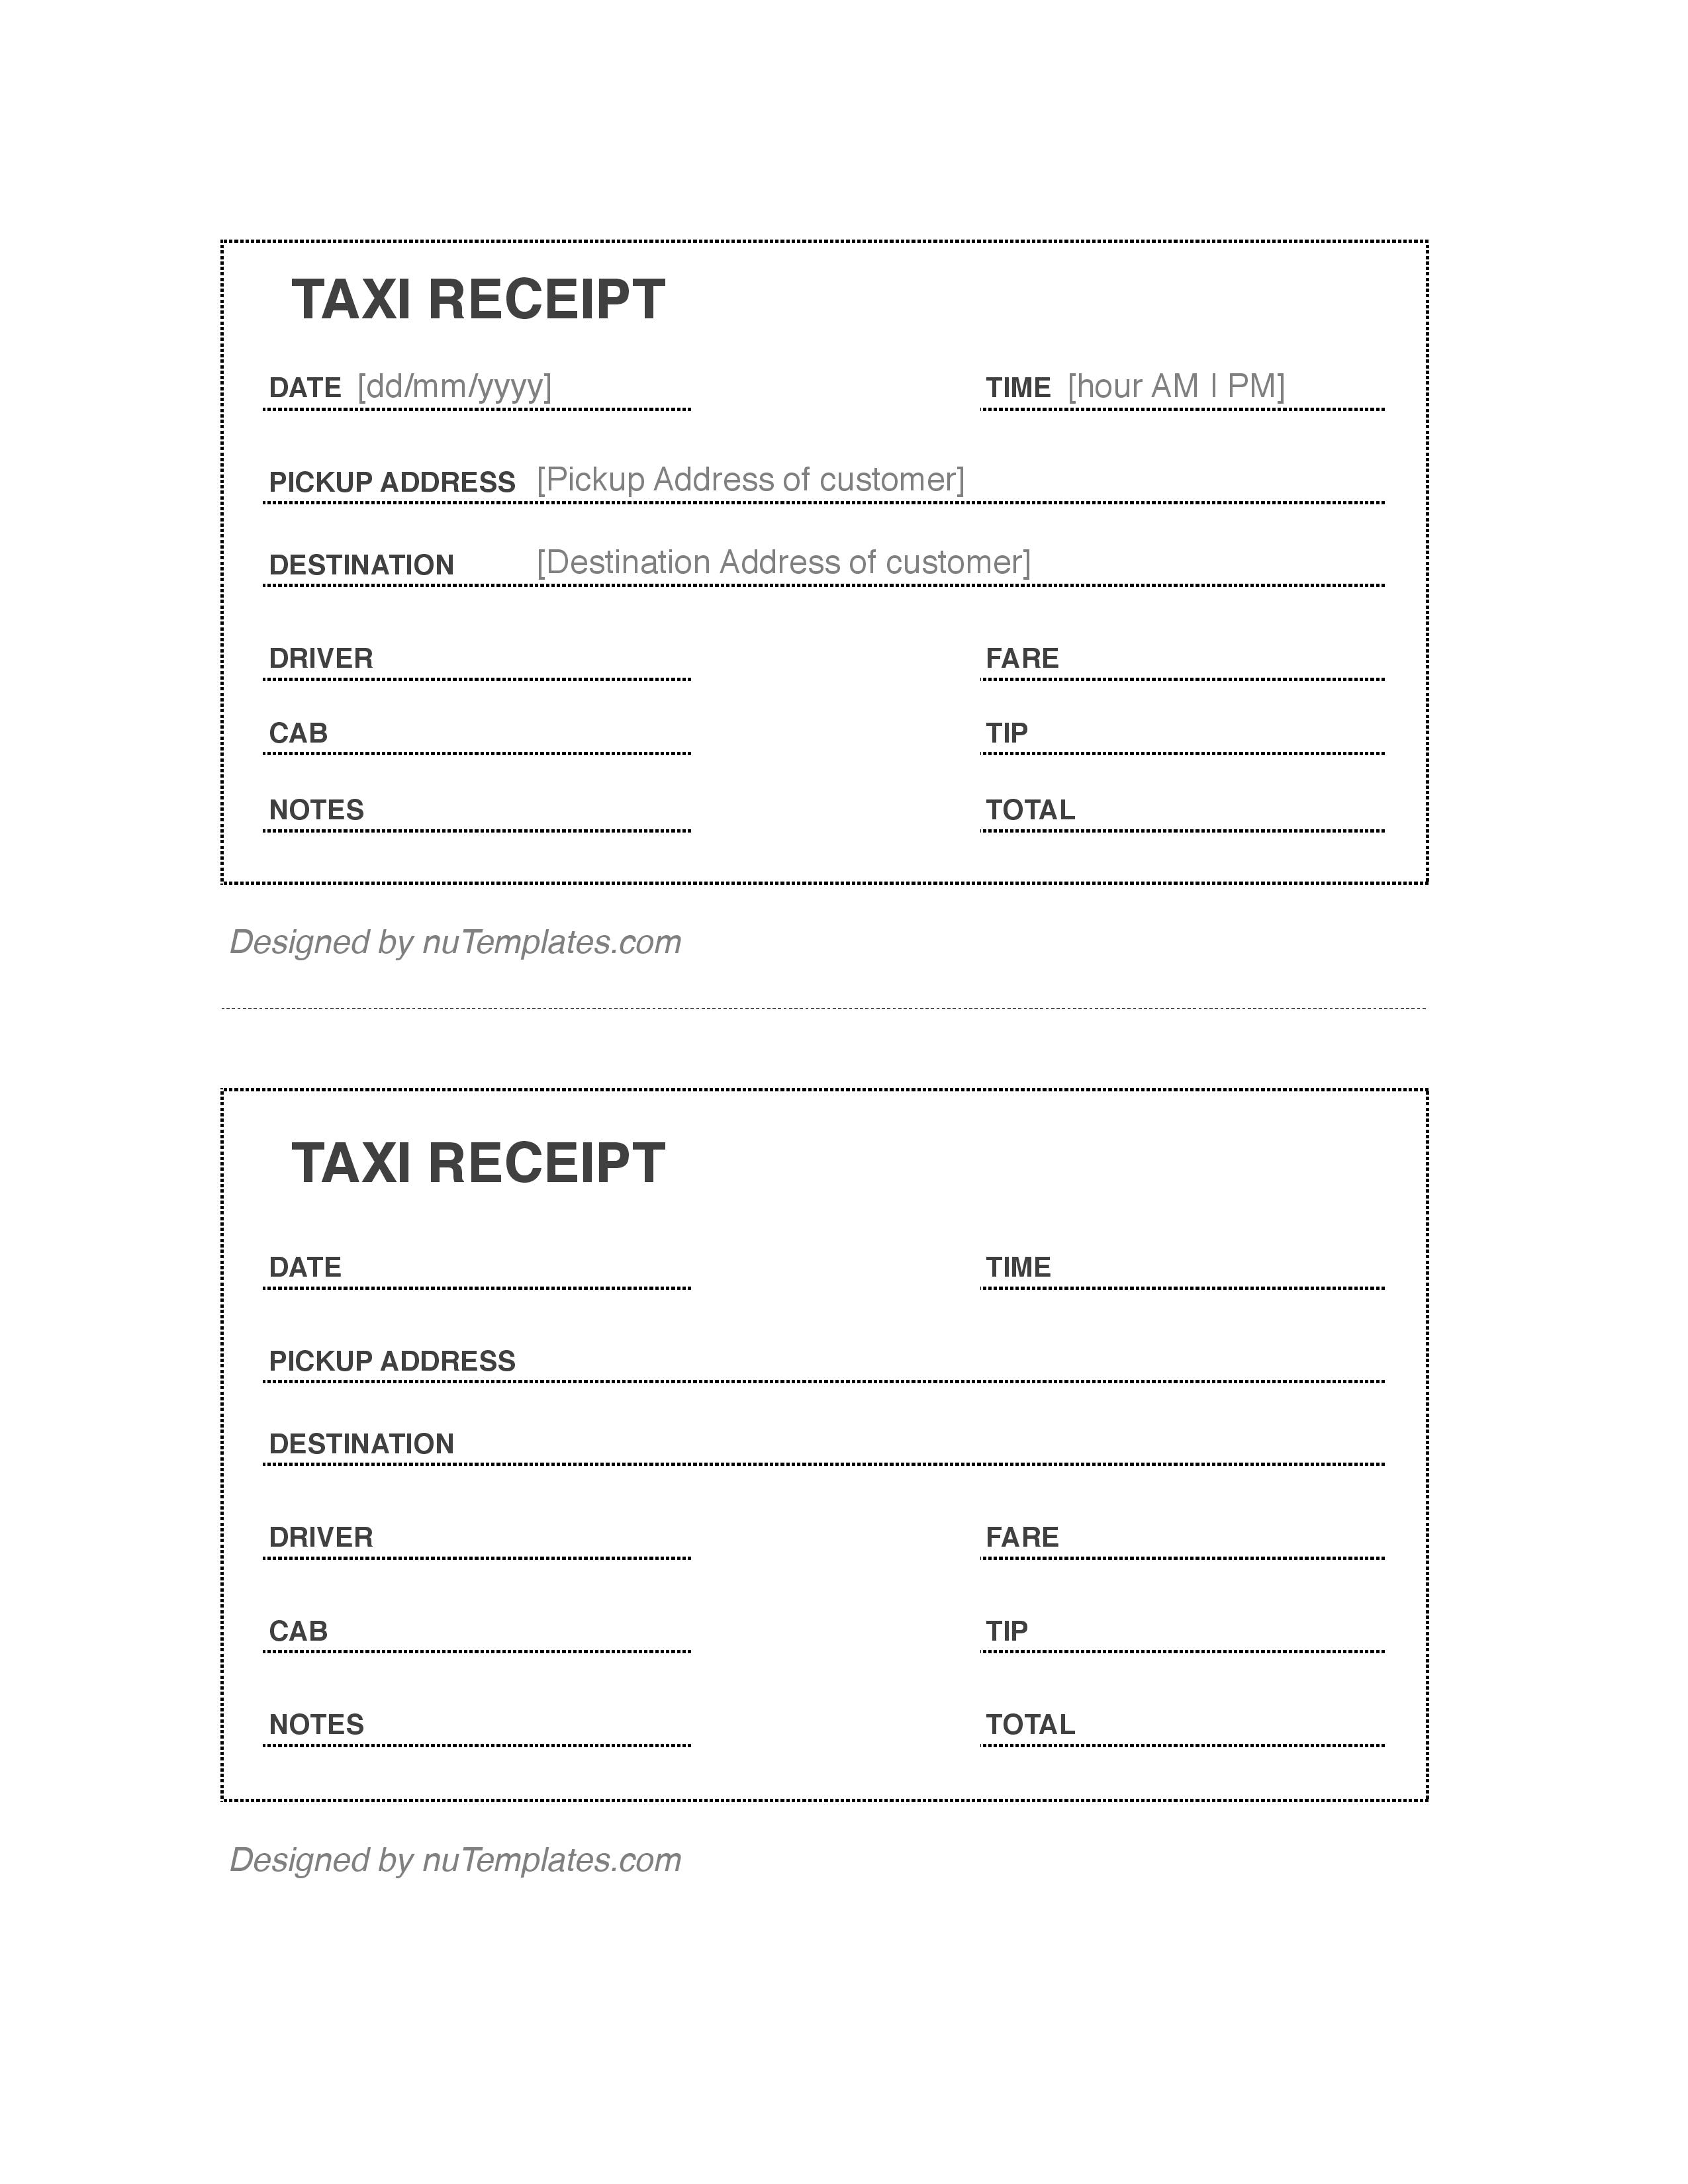 taxi-receipt-jpg